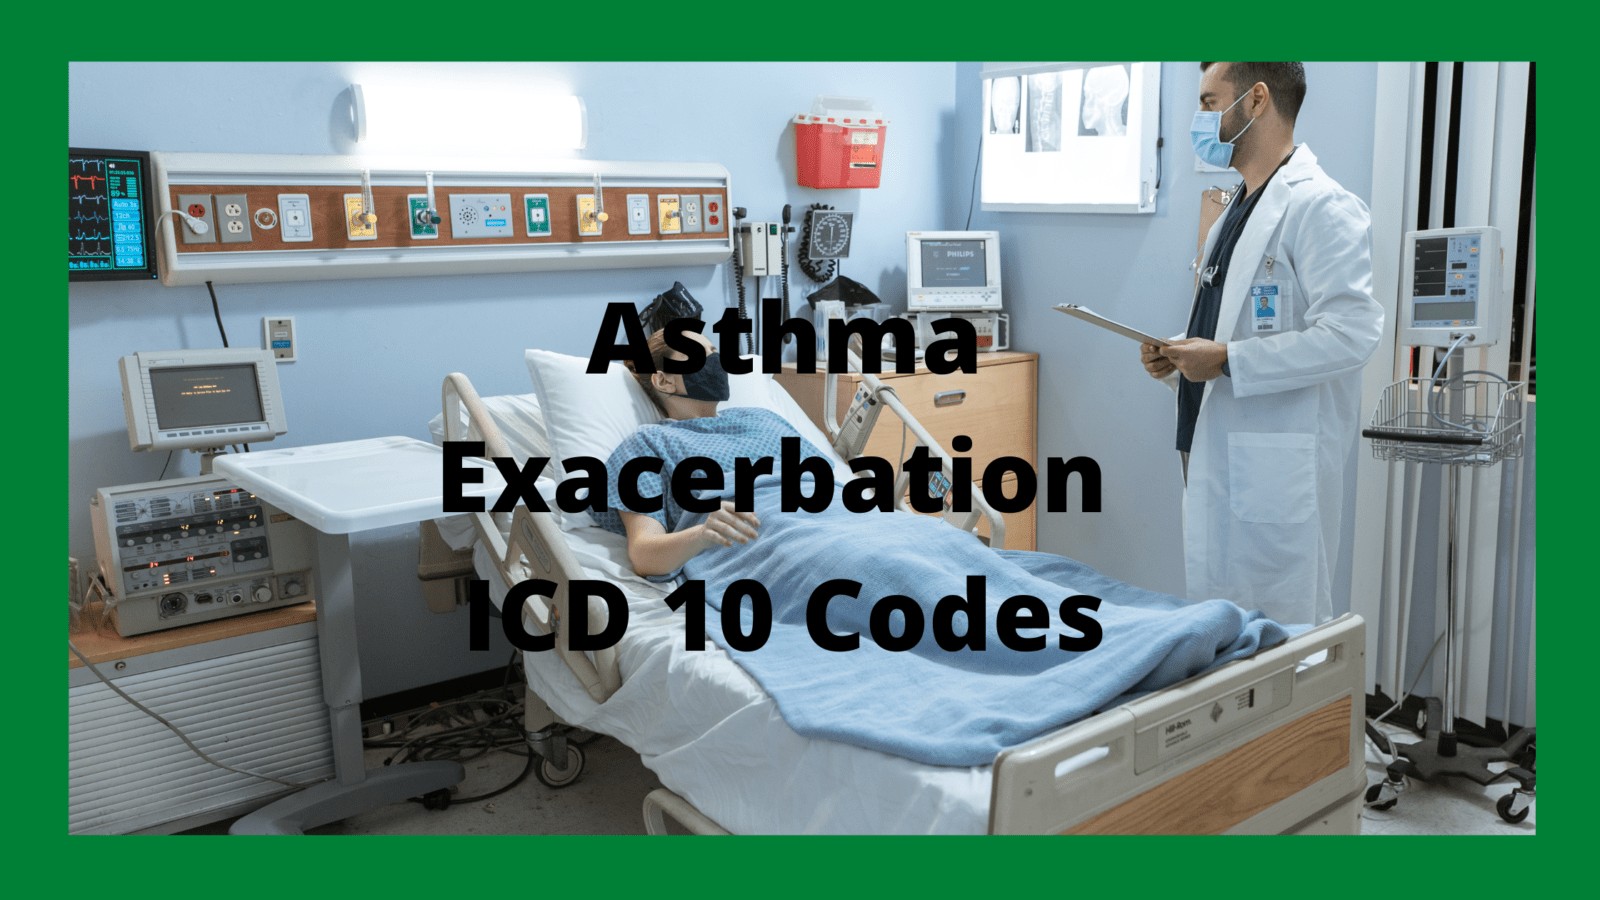 ICD 10 Asthma Exacerbation